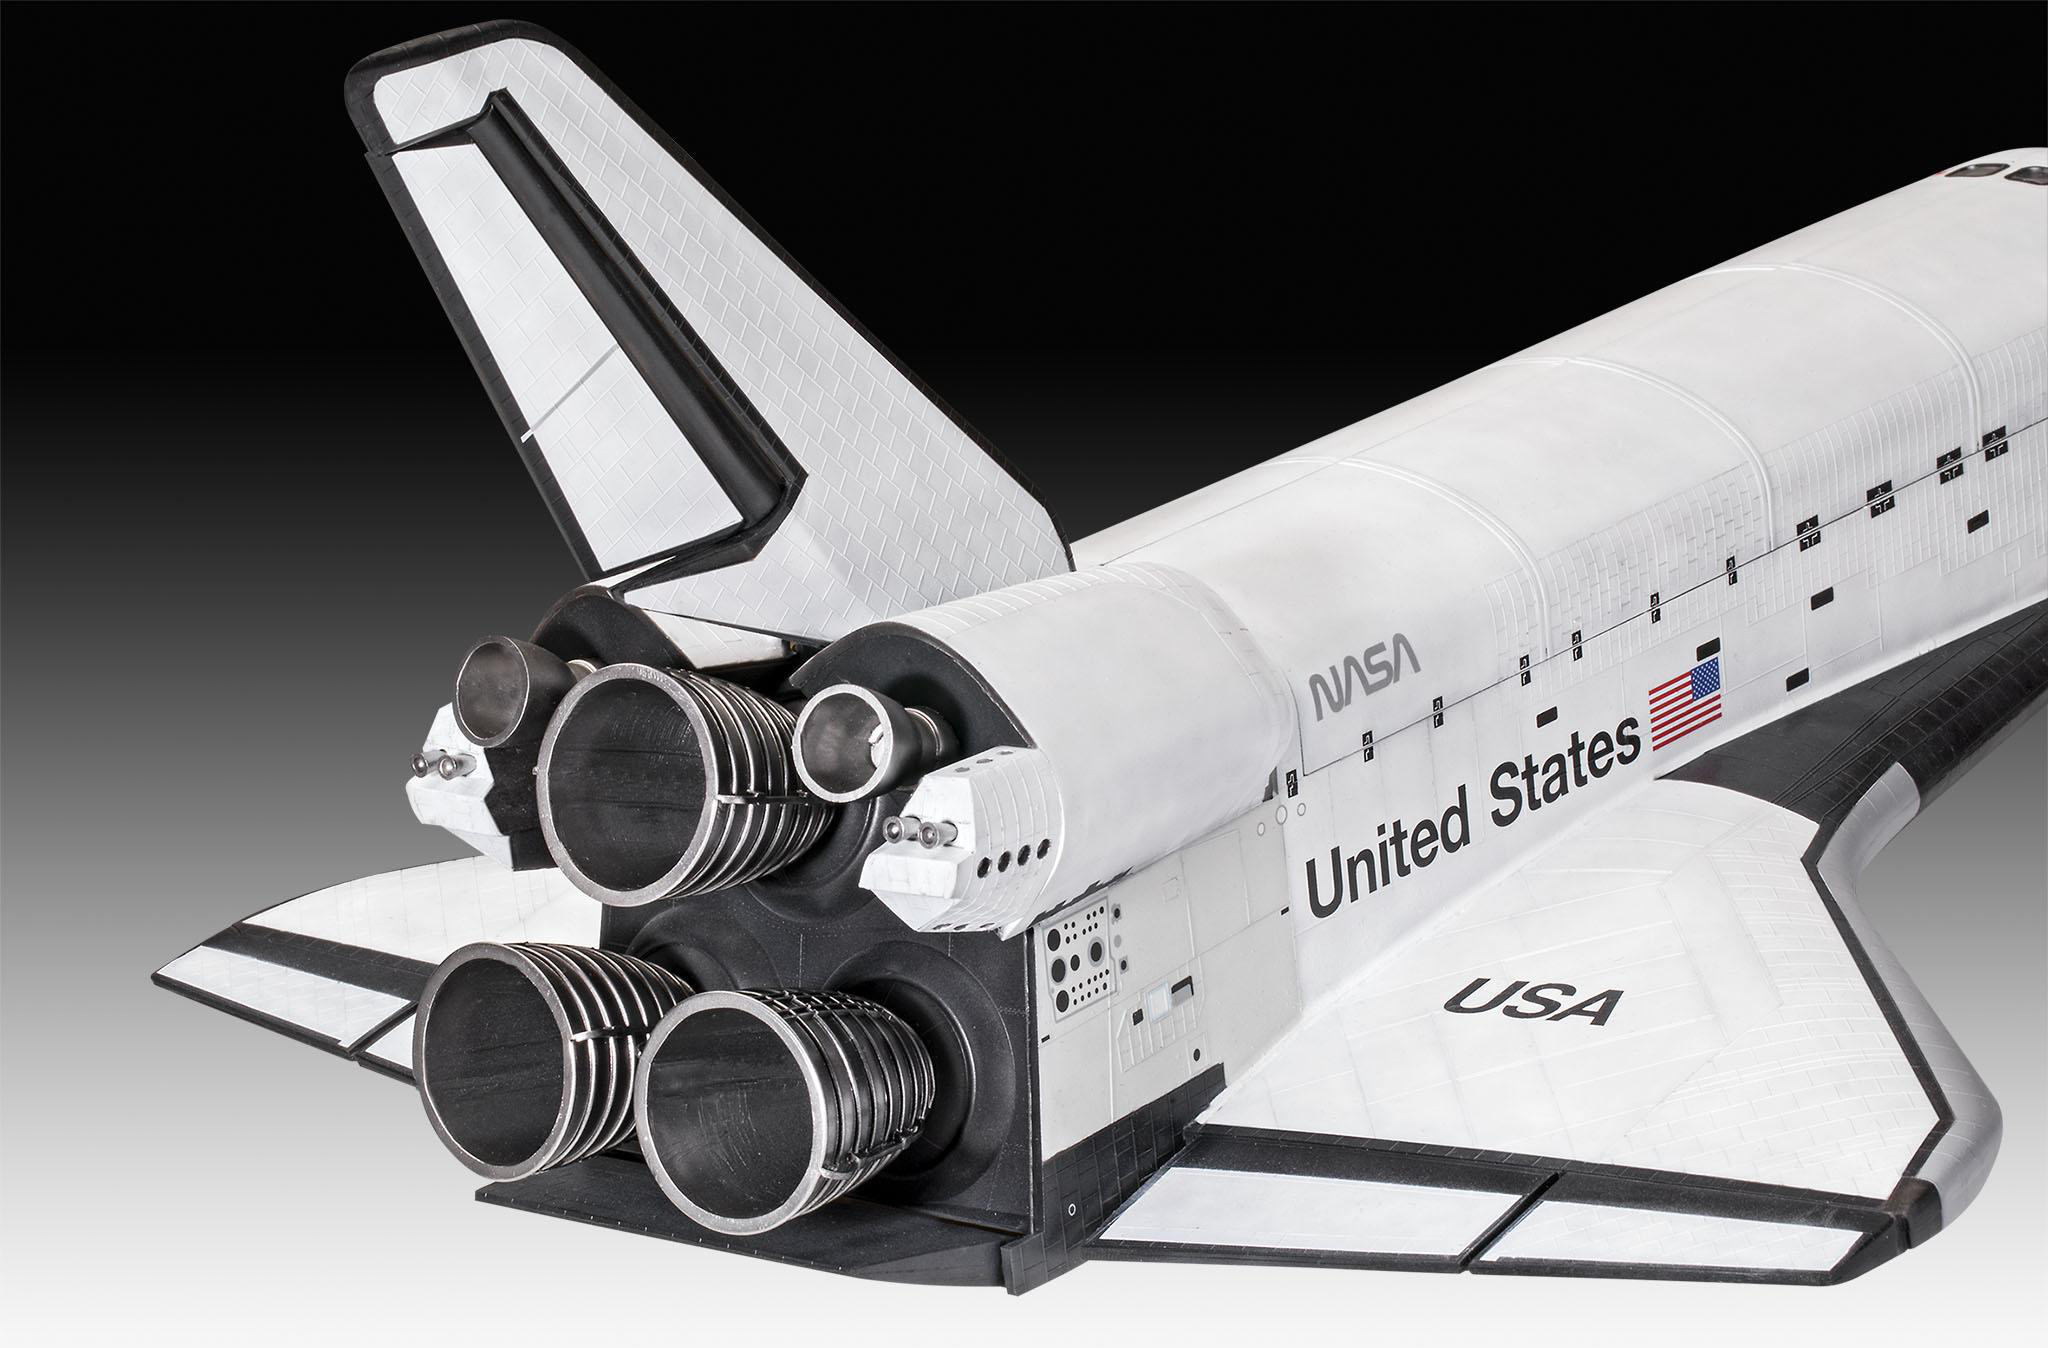 REVELL Geschenkset Space Shuttle, Anniversary 40th. Modellbausatz, Mehrfarbig